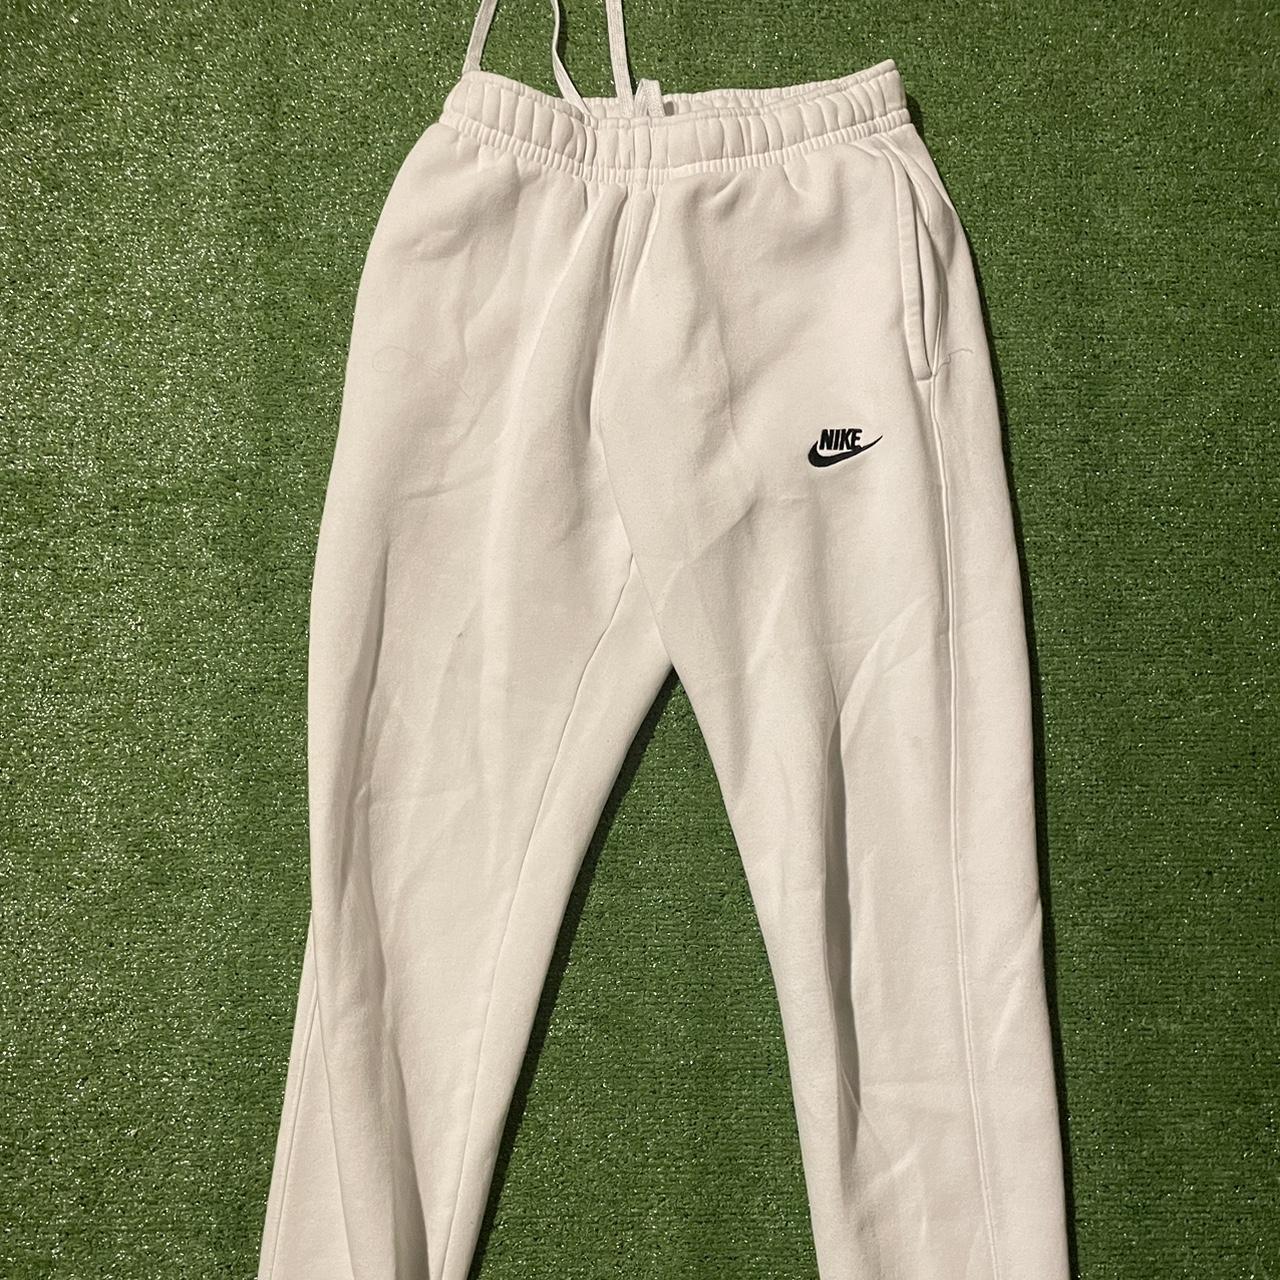 White Nike Sweatpants